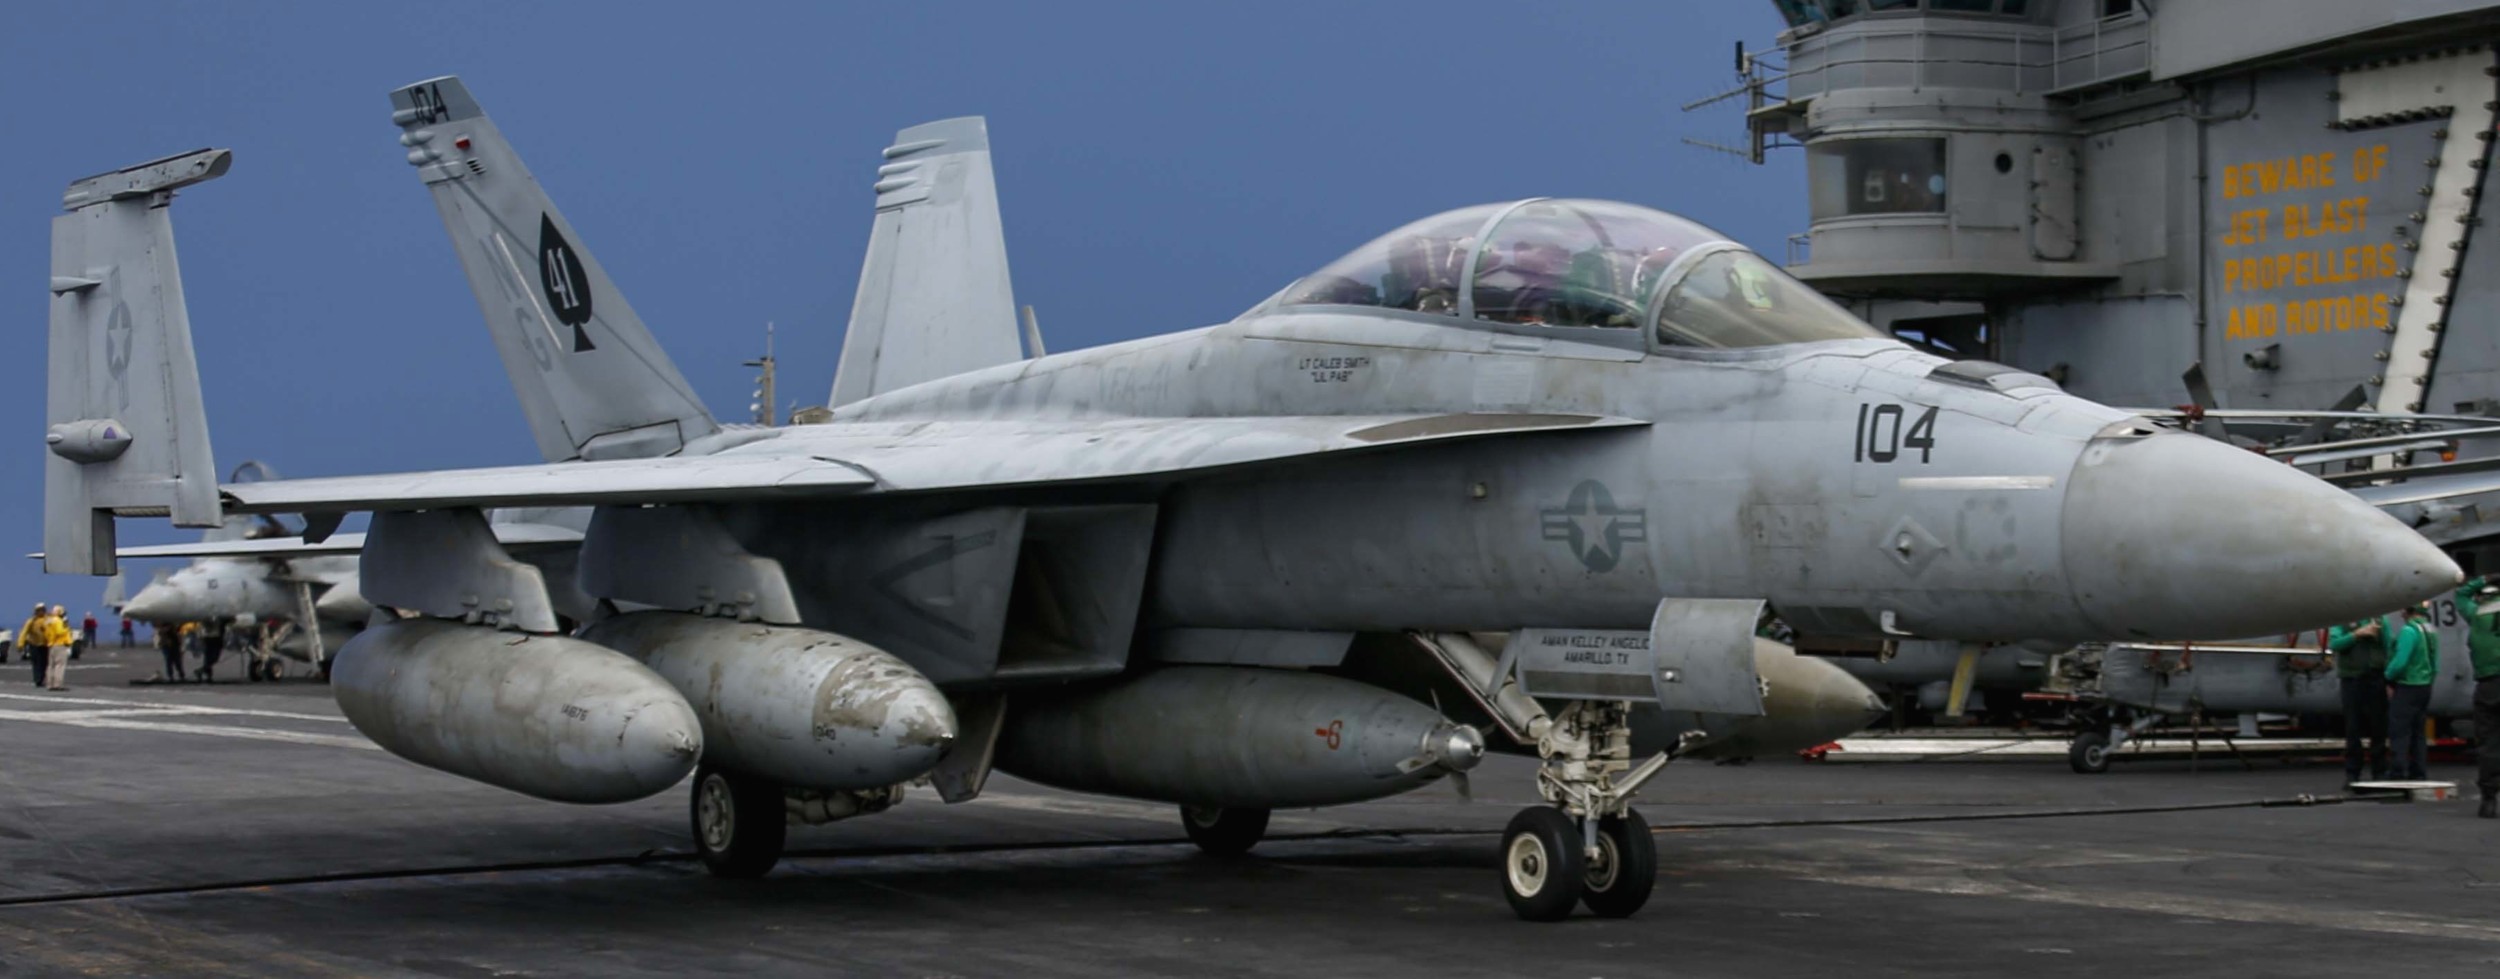 vfa-41 black aces strike fighter squadron f/a-18f super hornet cvw-9 cvn-72 uss abraham lincoln us navy 102